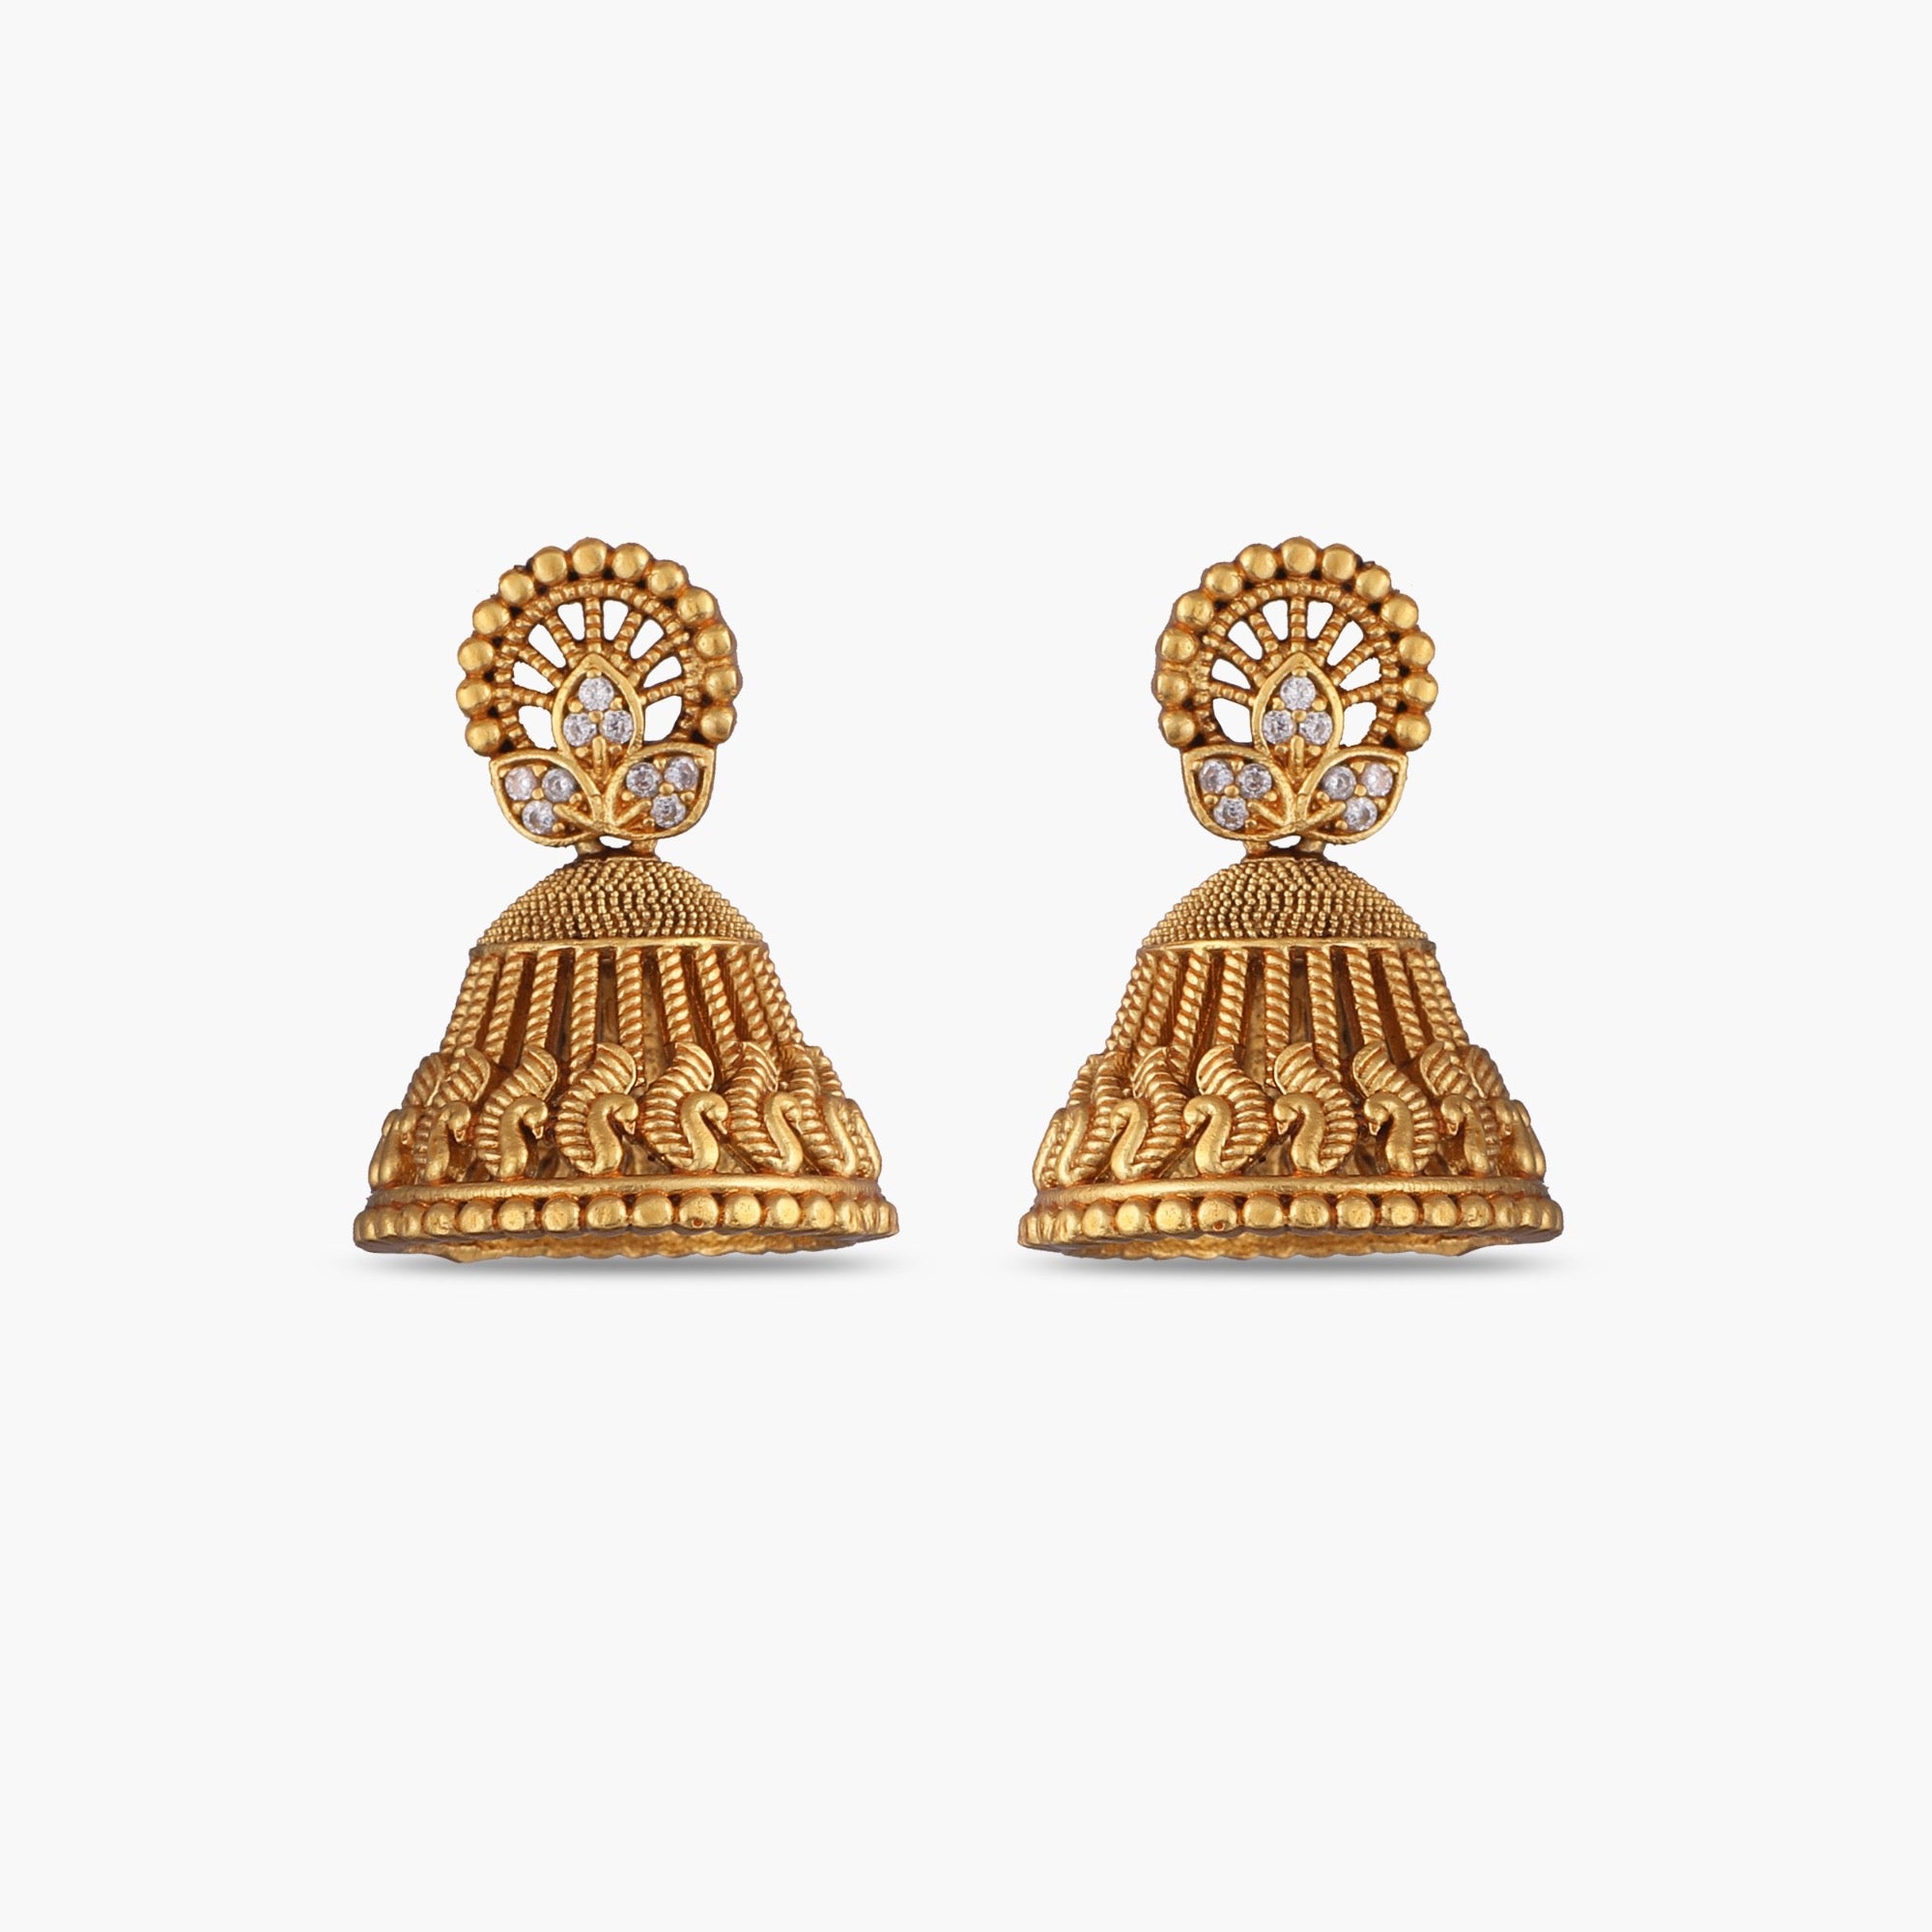 Jhumka Earrings with Crystals - Jhumka Designs for Parties and Weddings - Small  Jhumkas - Ketaki Jhumka Earrings by Blingvine